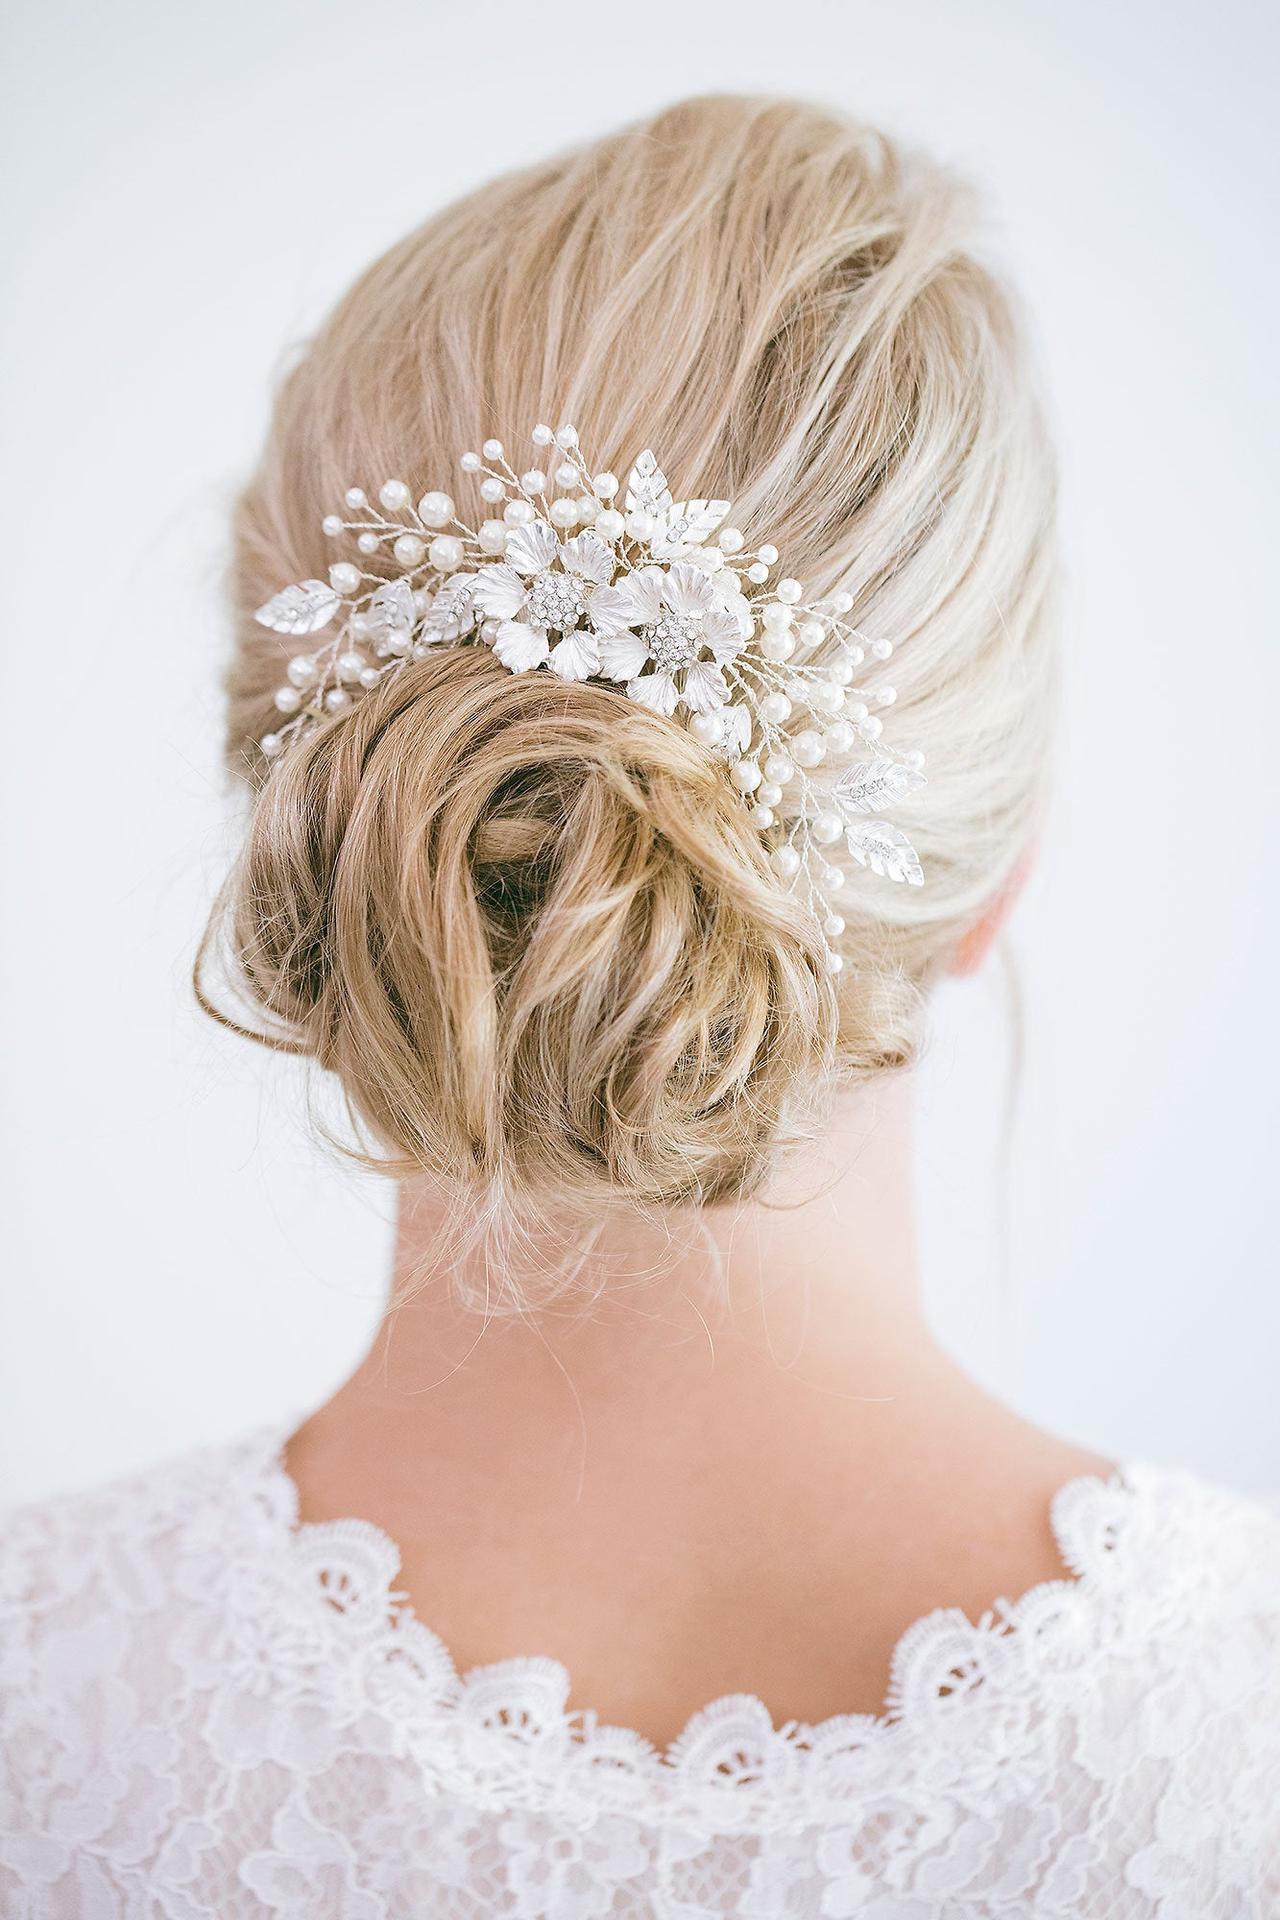 https://cdn0.weddingwire.com/article/9730/original/1280/jpg/379-etsy-rosyrosestudio-wedding-hair-accessories.jpeg